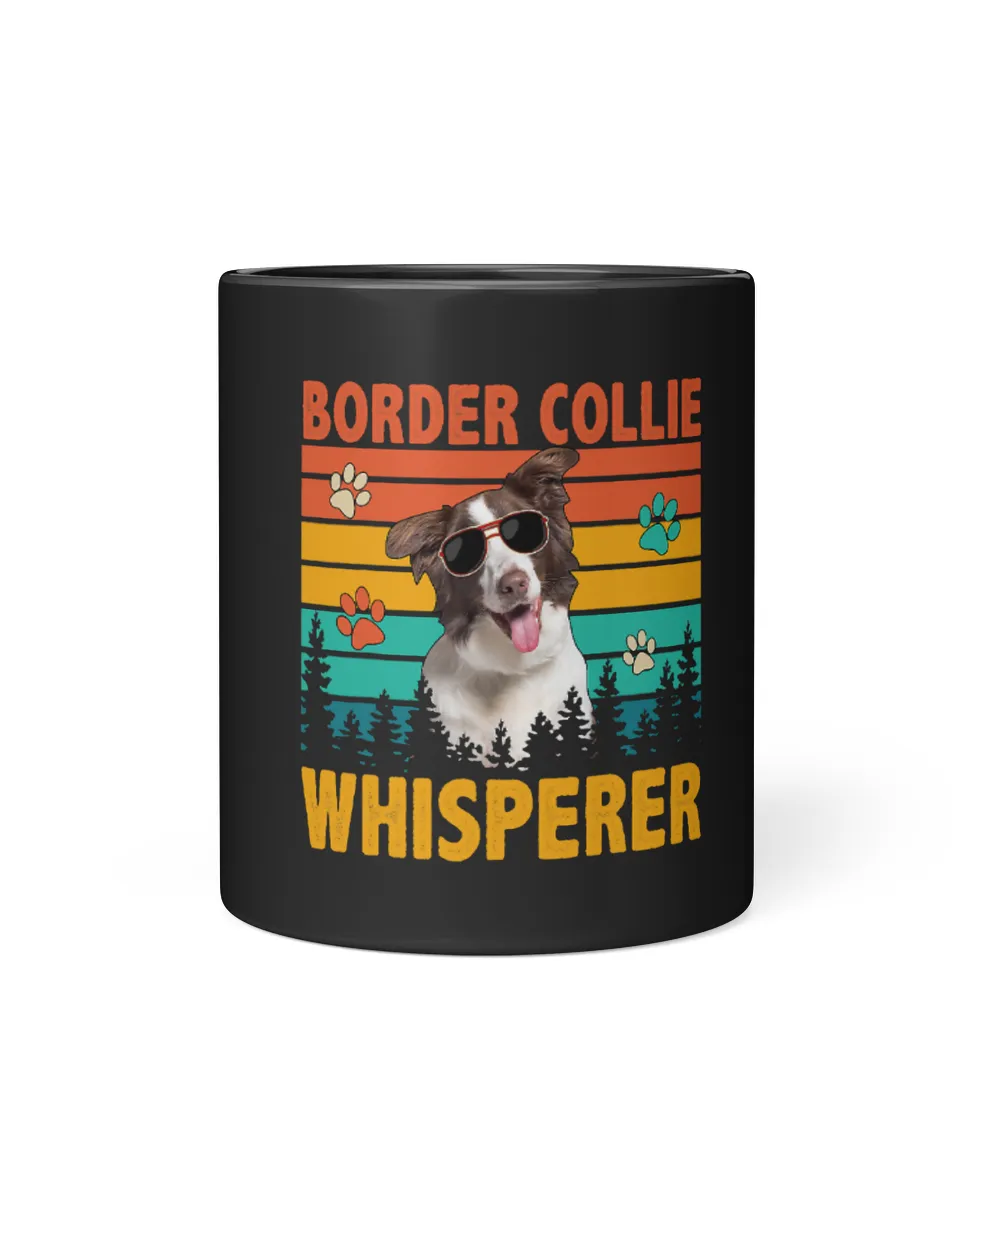 Vintage Retro Border Collie Whisperer Funny Dog Sunglasses